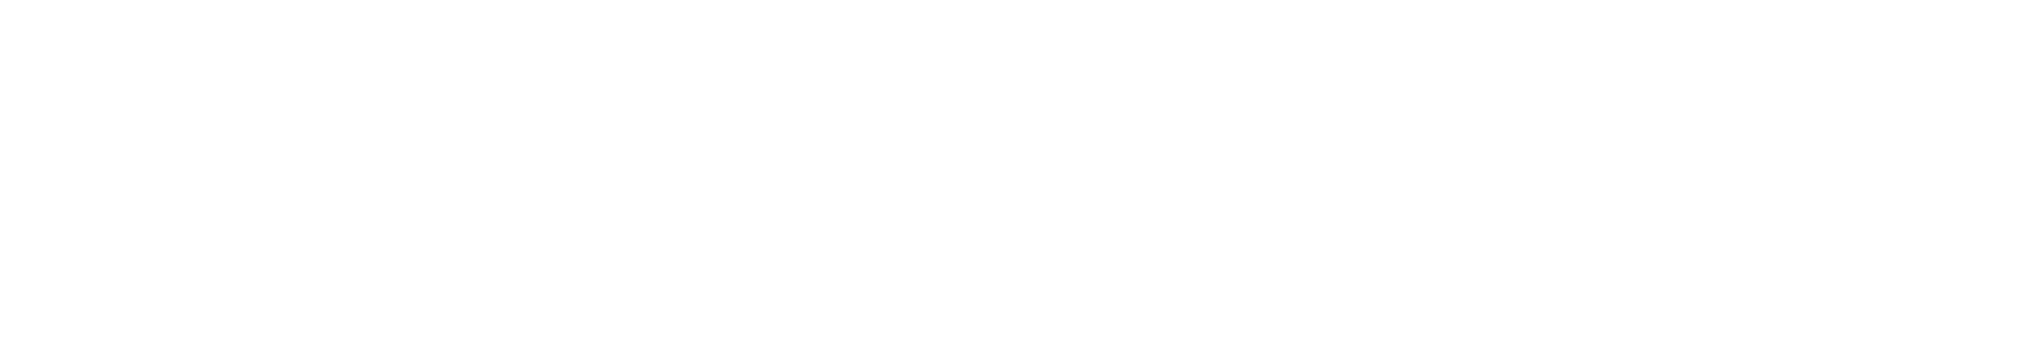 Best School Awards logo